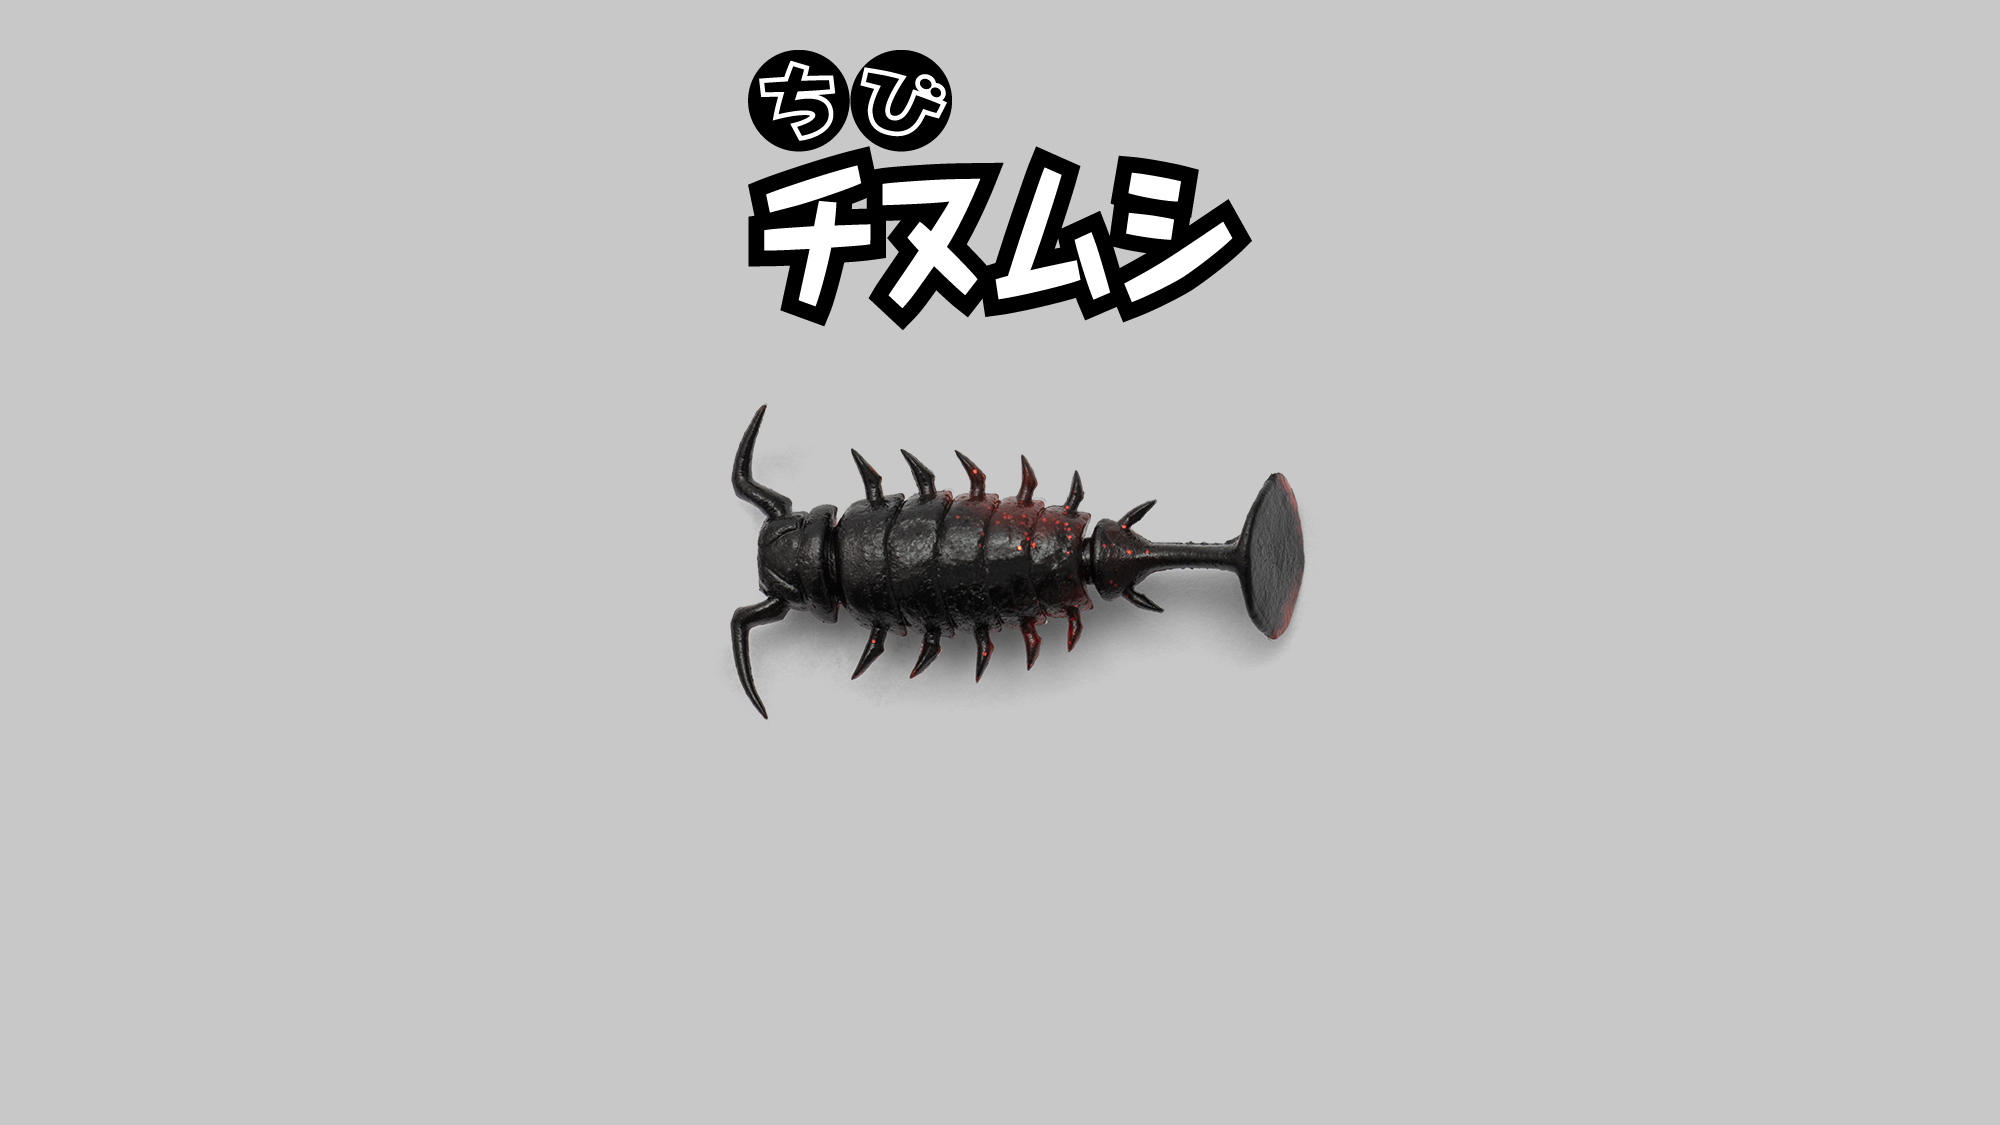  CHIBI CHINUMUSHI 1.5″ / ちびチヌムシ 1.5″